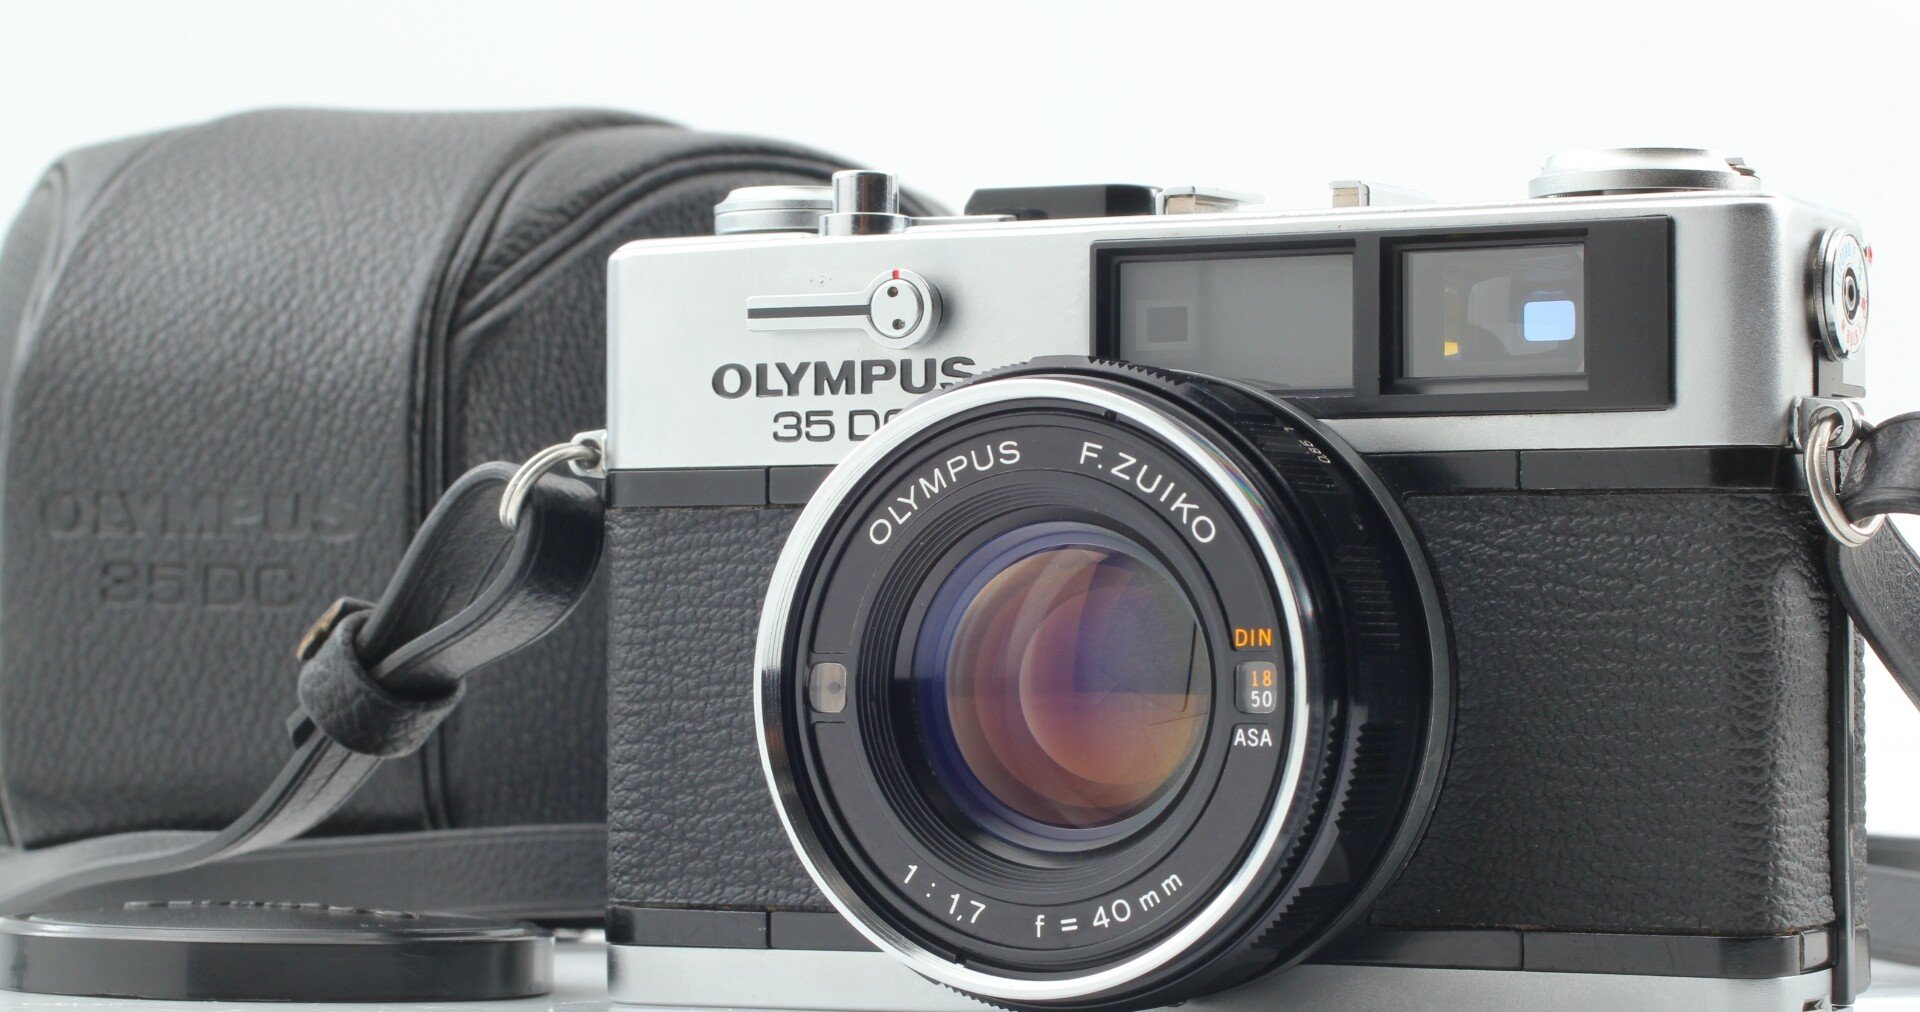 WEBストア限定 OLYMPUS 【動作確認済】 35DC y c0820-5ec フィルムカメラ